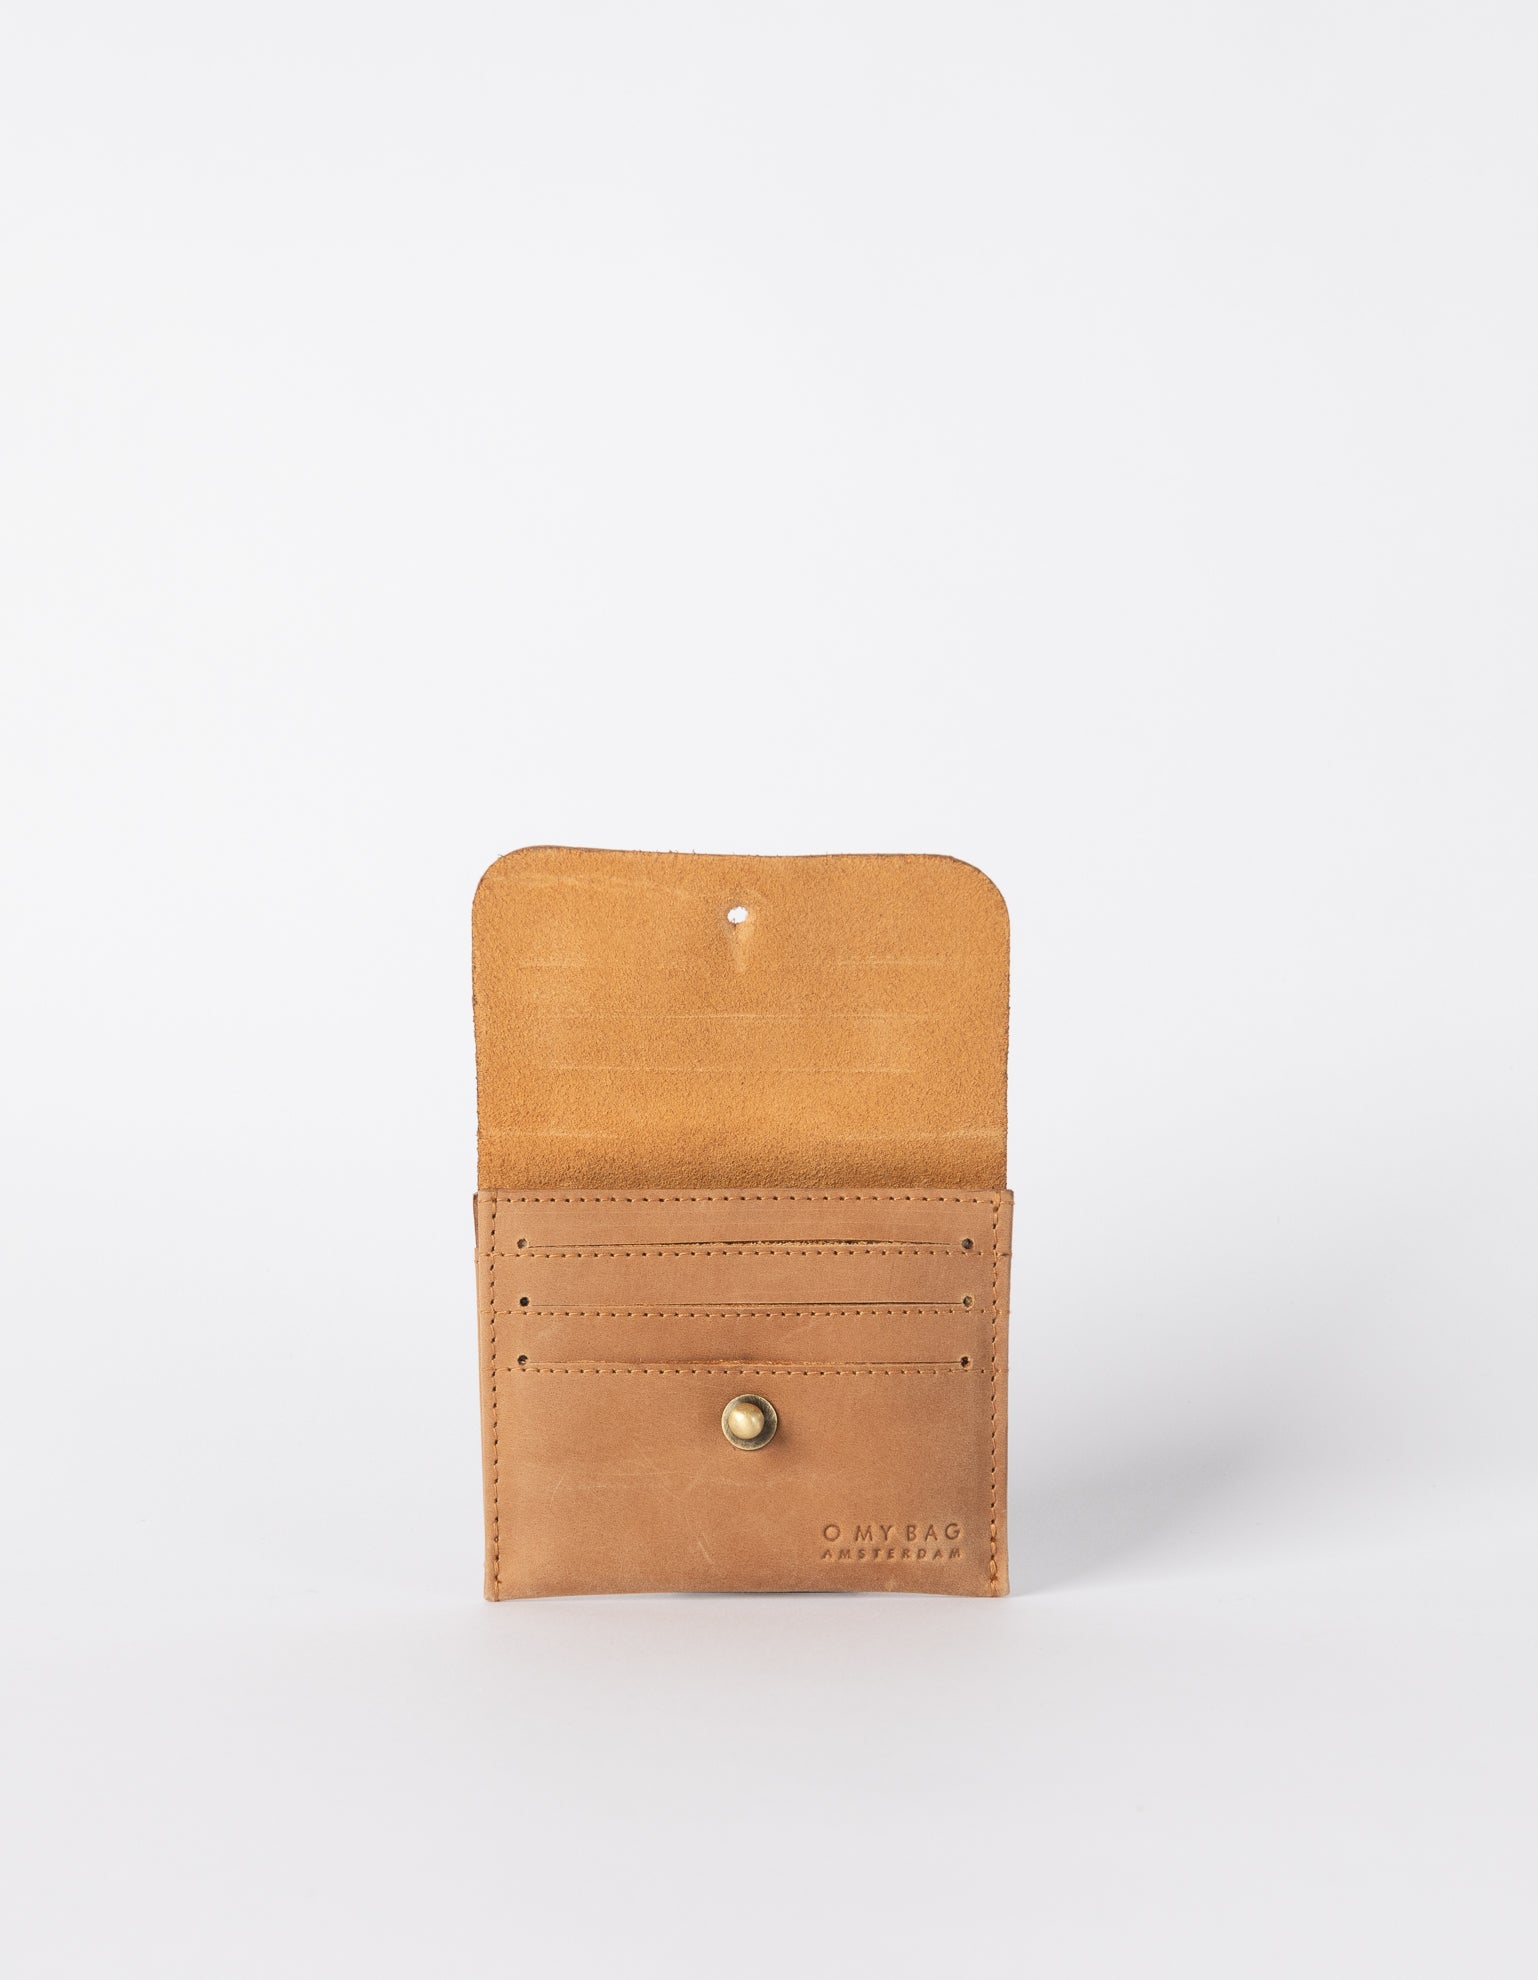 Small Camel cardholder. Square shape. Inside image